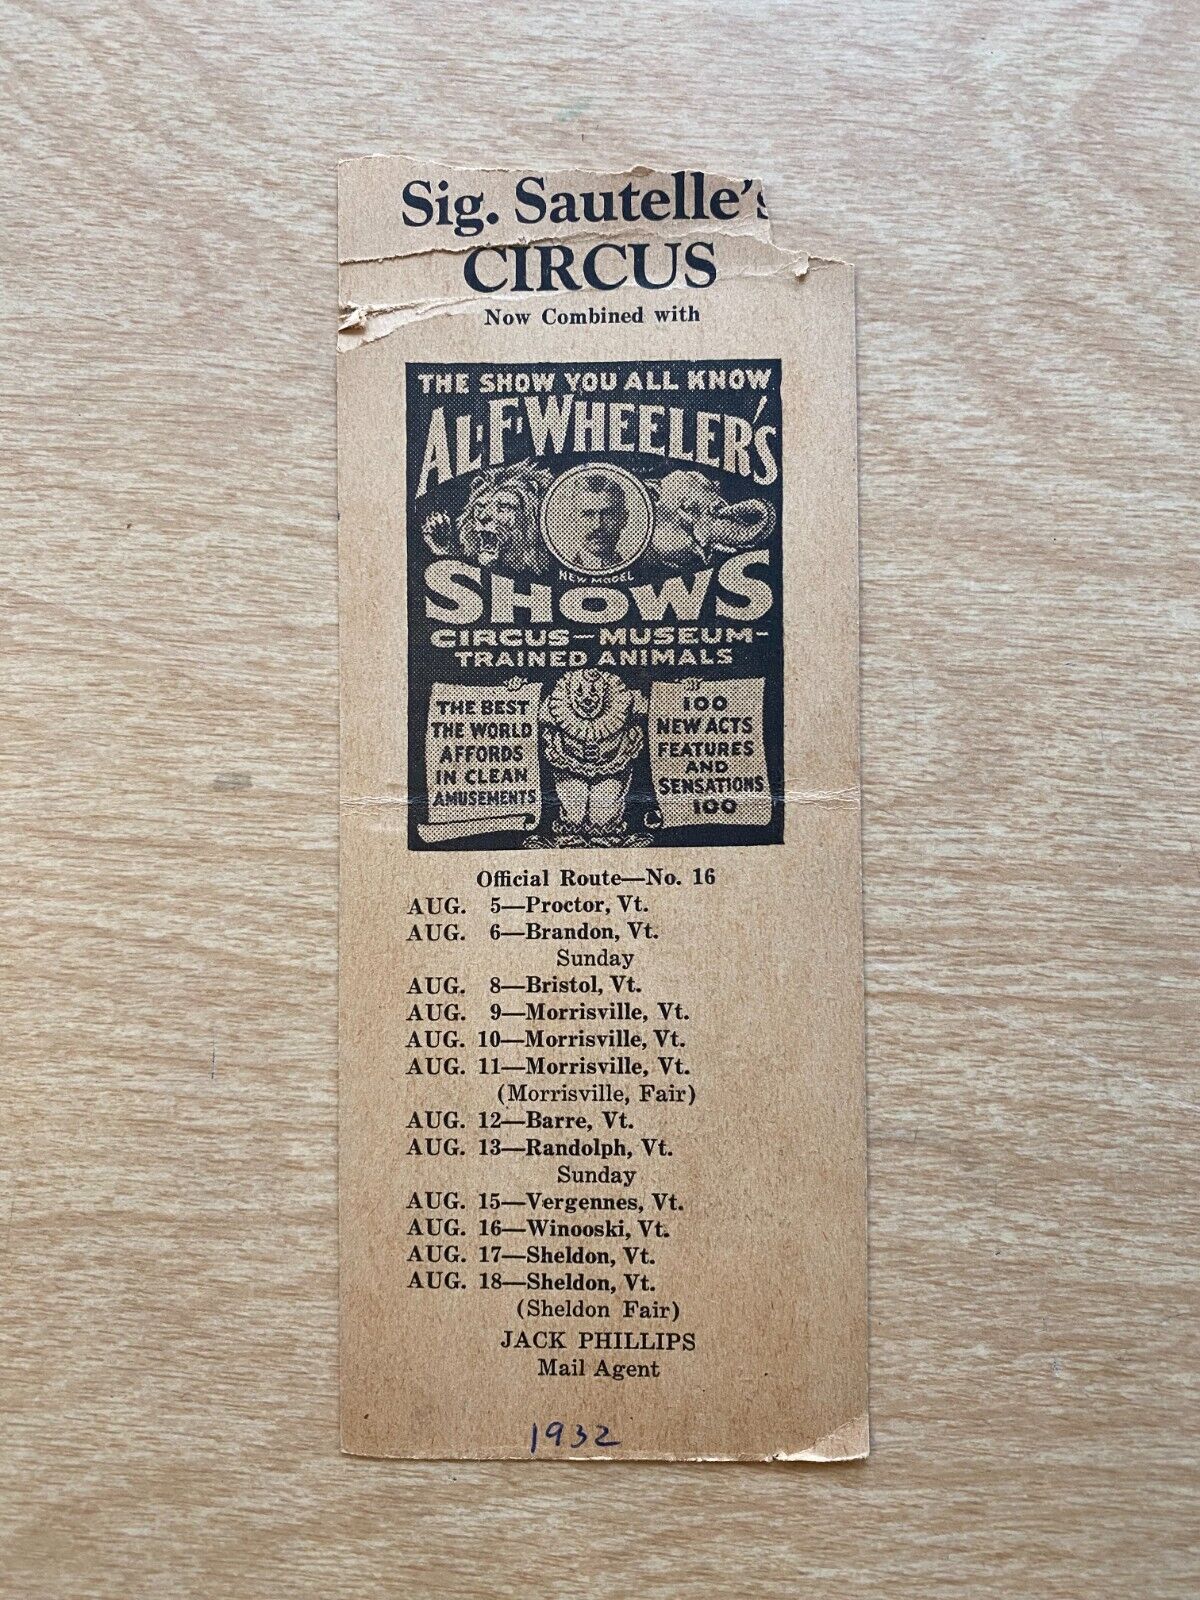 Al F Wheeler\'s Circus Shows Season 1932 Route Card Vintage Program Clown Lion